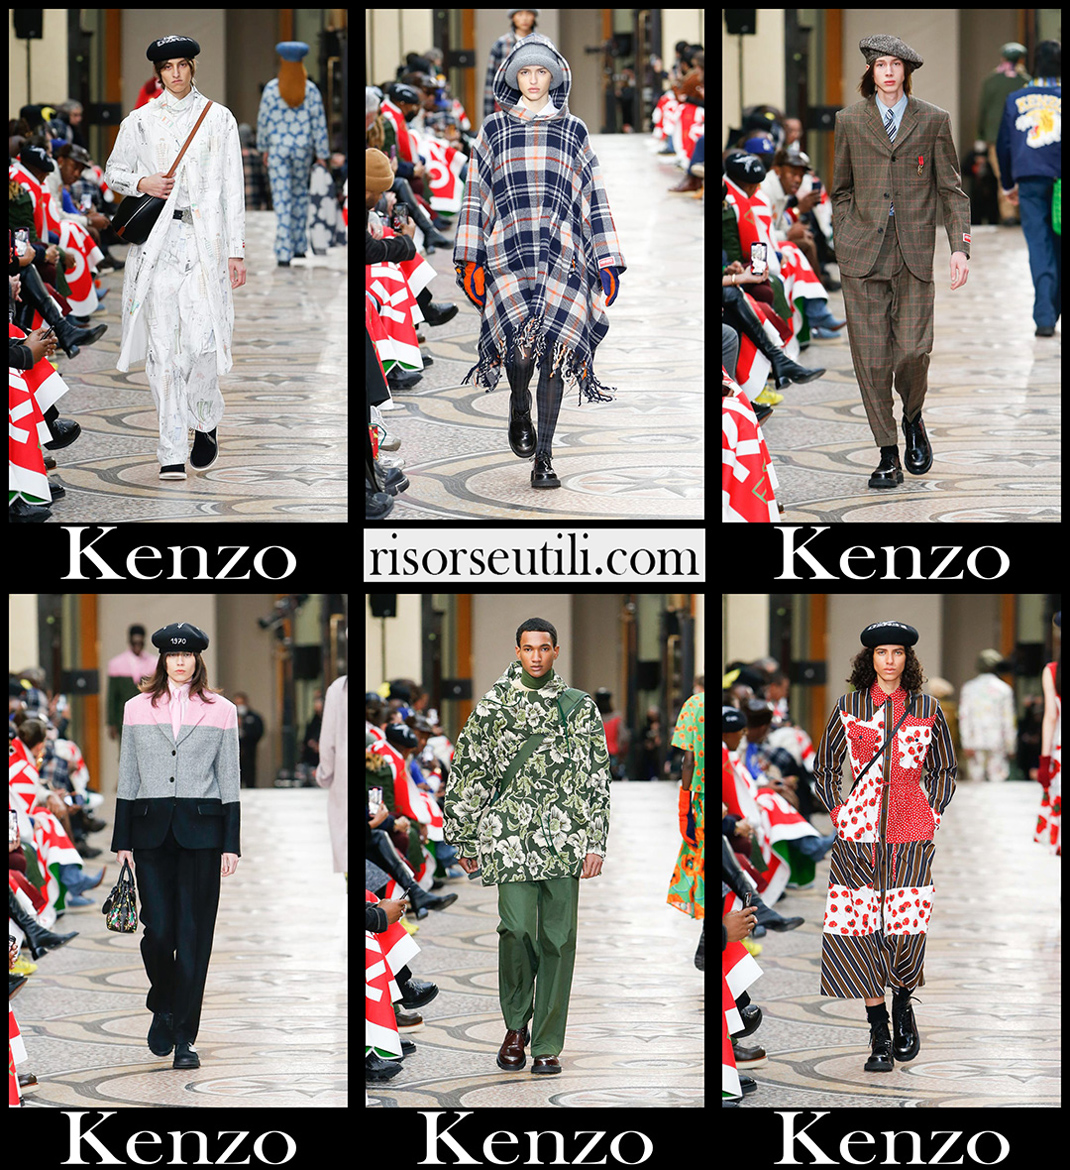 Kenzo spring summer 2024 clothing fashion show